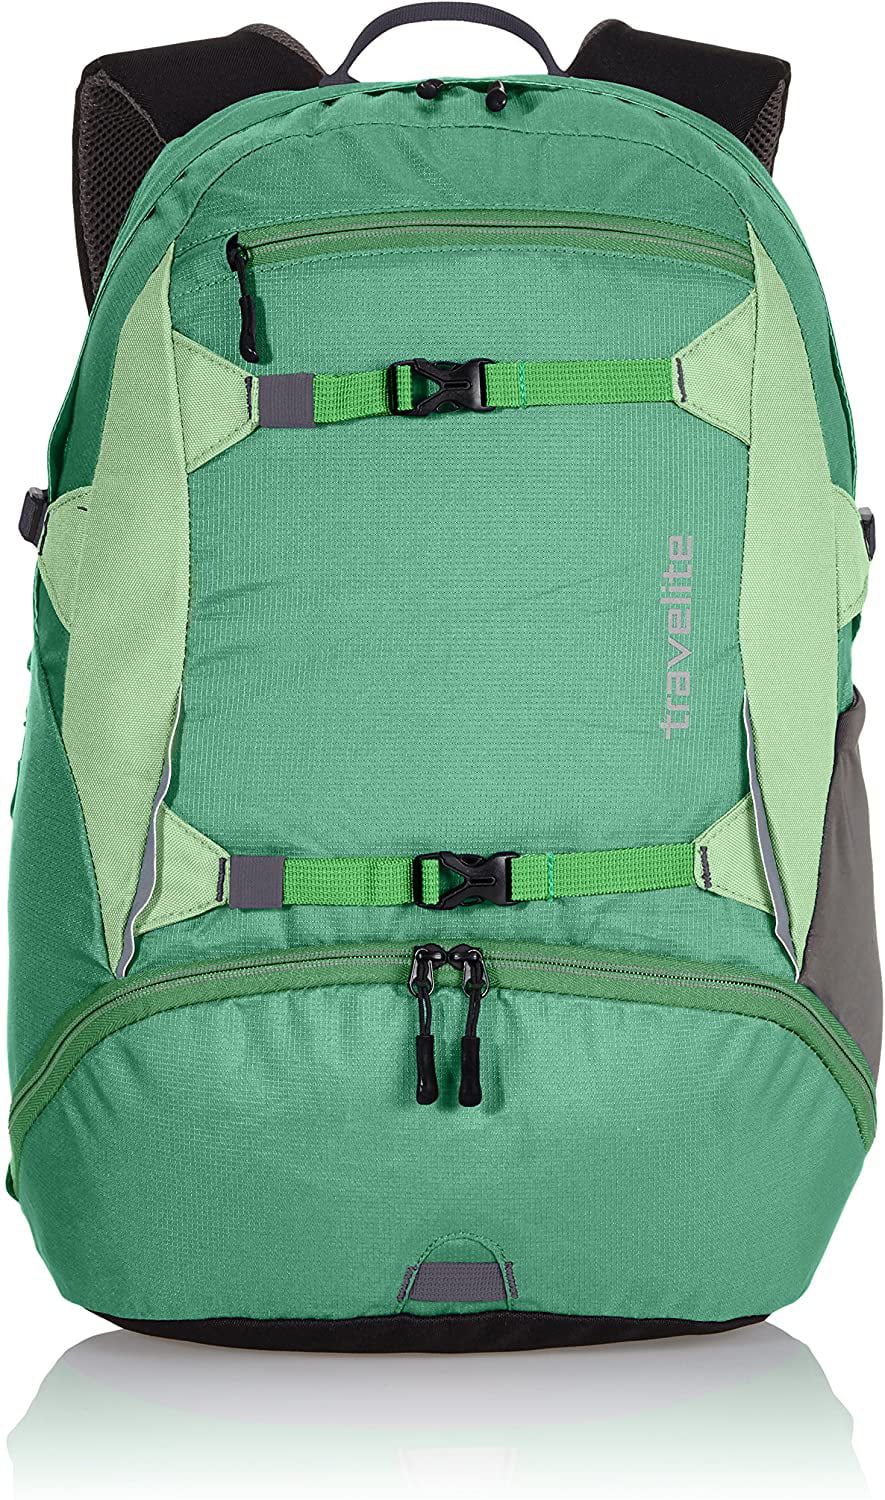 Behandeling Bek Afscheiden Travelite Basics Lightweight Travel Backpack - Green - Walmart.com